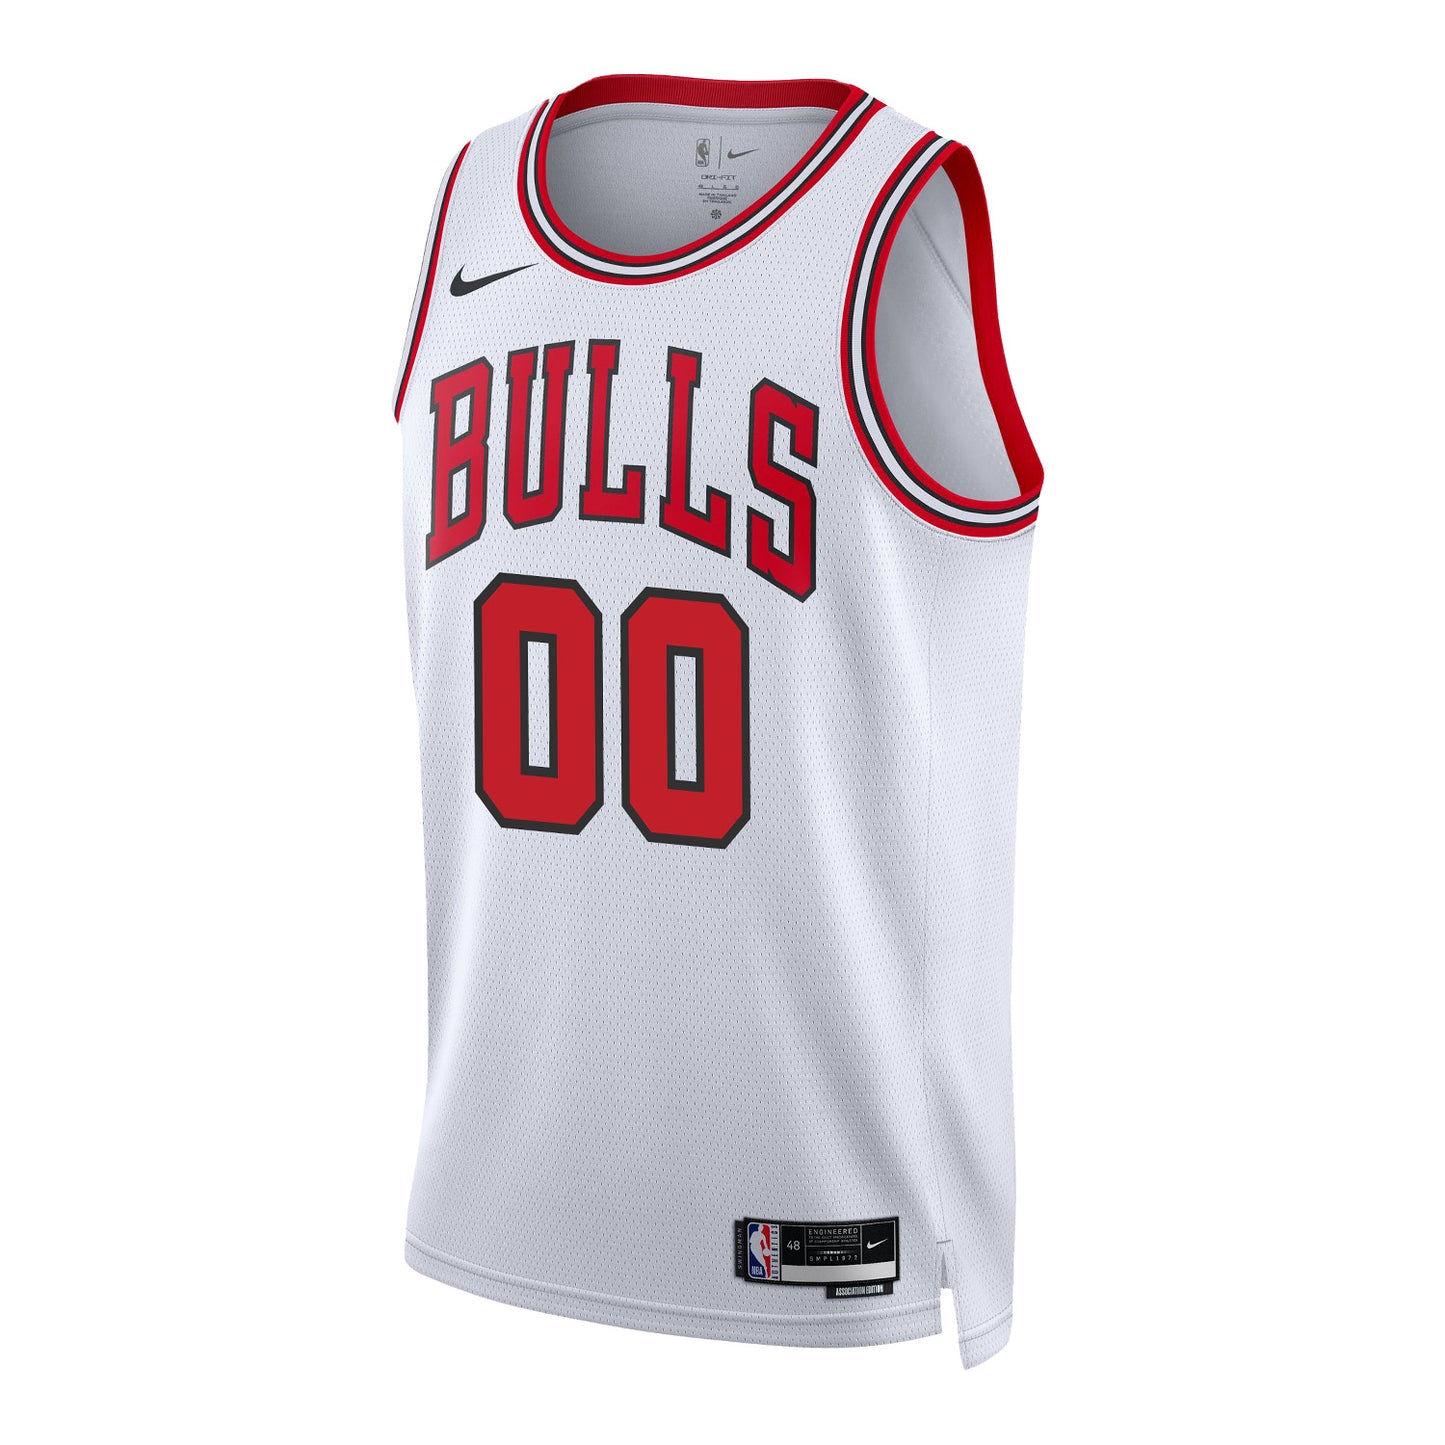 Chicago Bulls Personalized Nike Association Swingman Jersey - front view